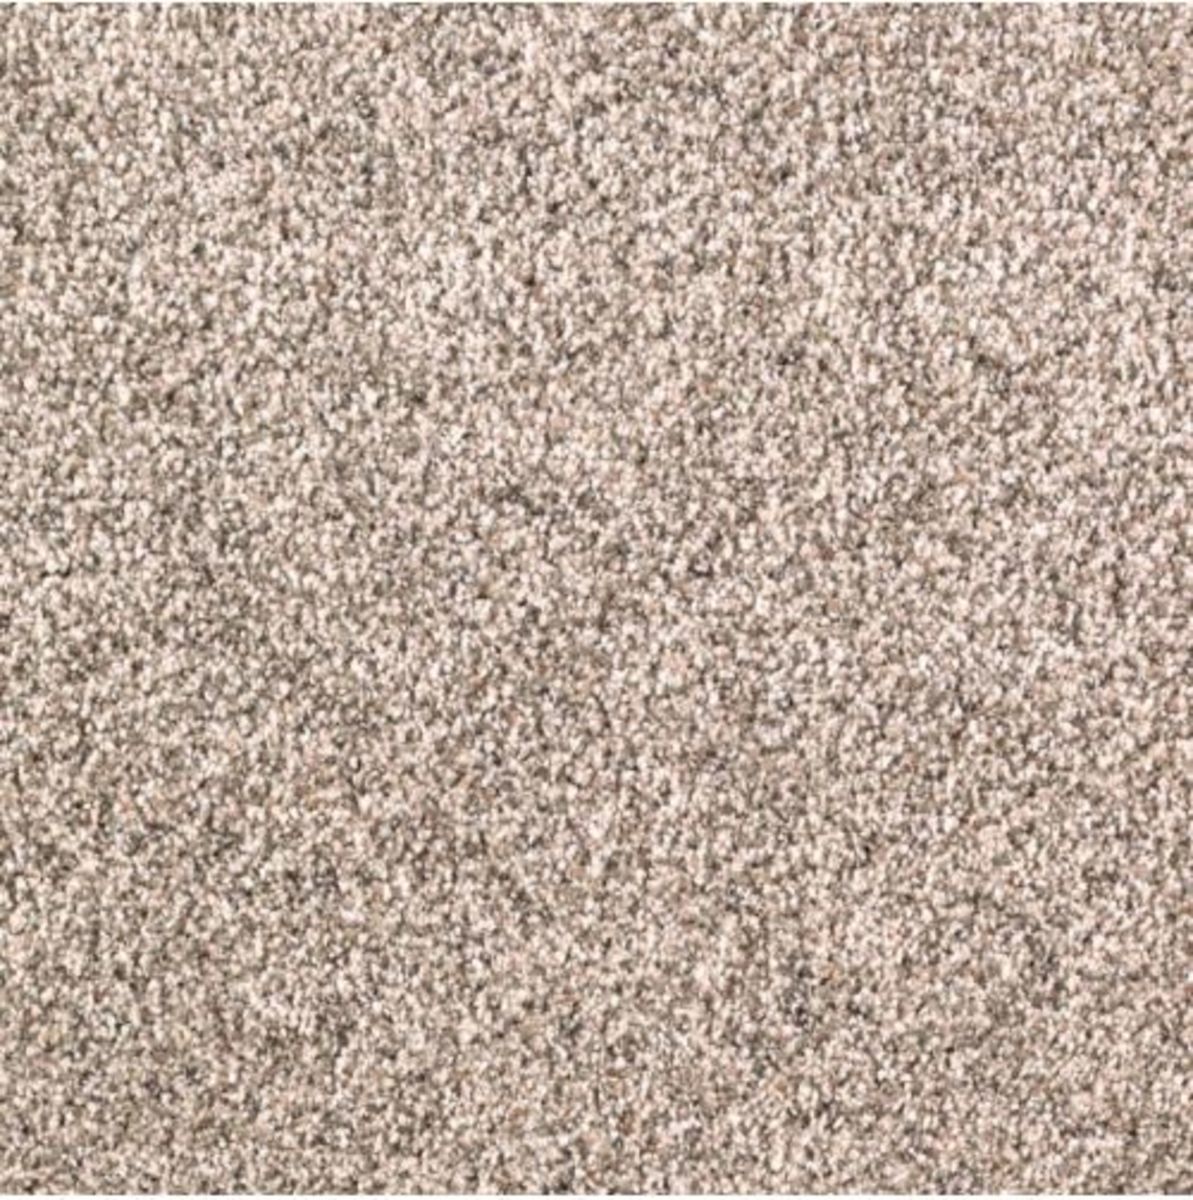 Top Card Oat Straw Carpet Samples Mohawk Flooring Textured Carpet